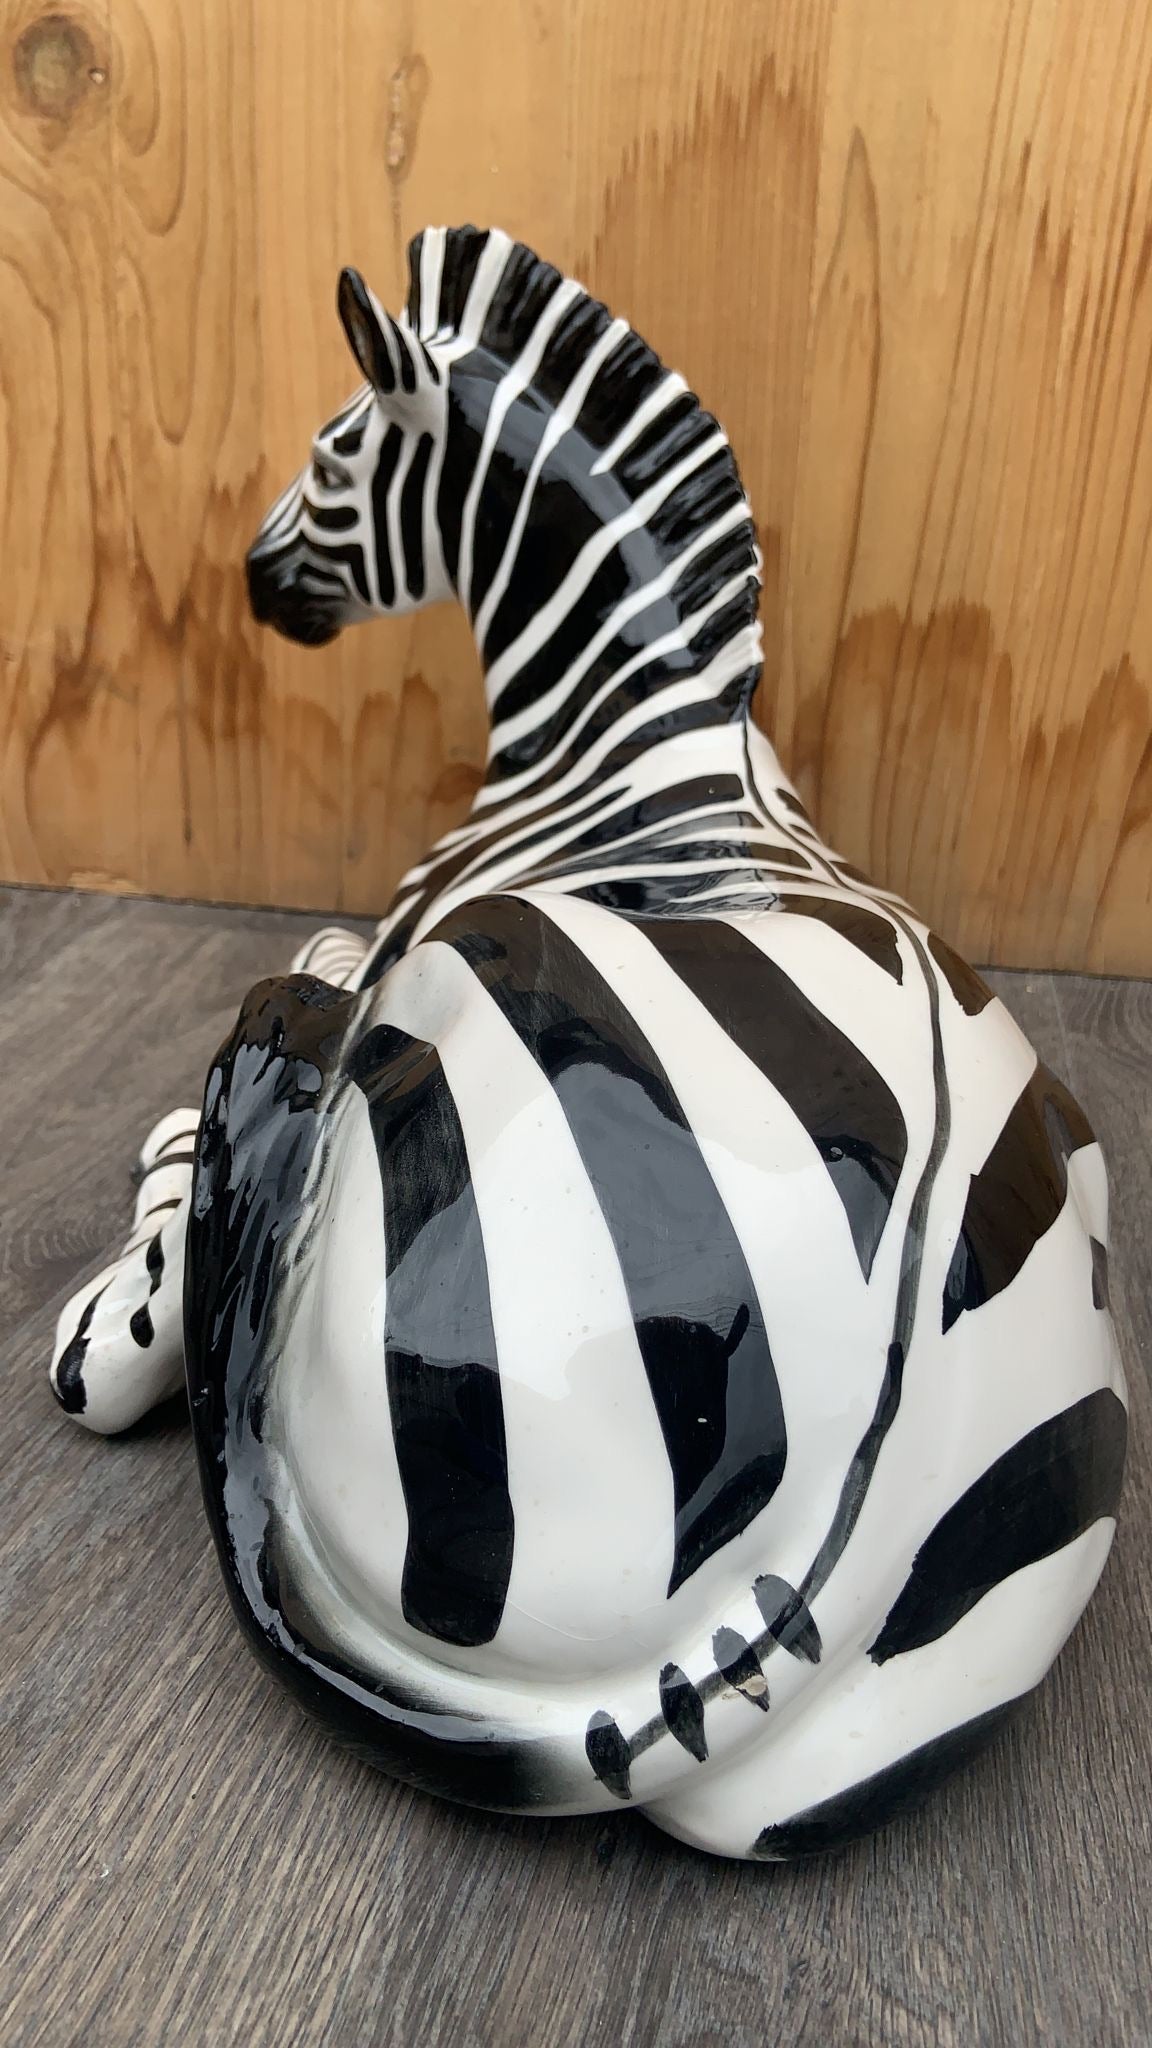 Mid Century Modern Ceramic Zebra Statue Sculpture Figurine